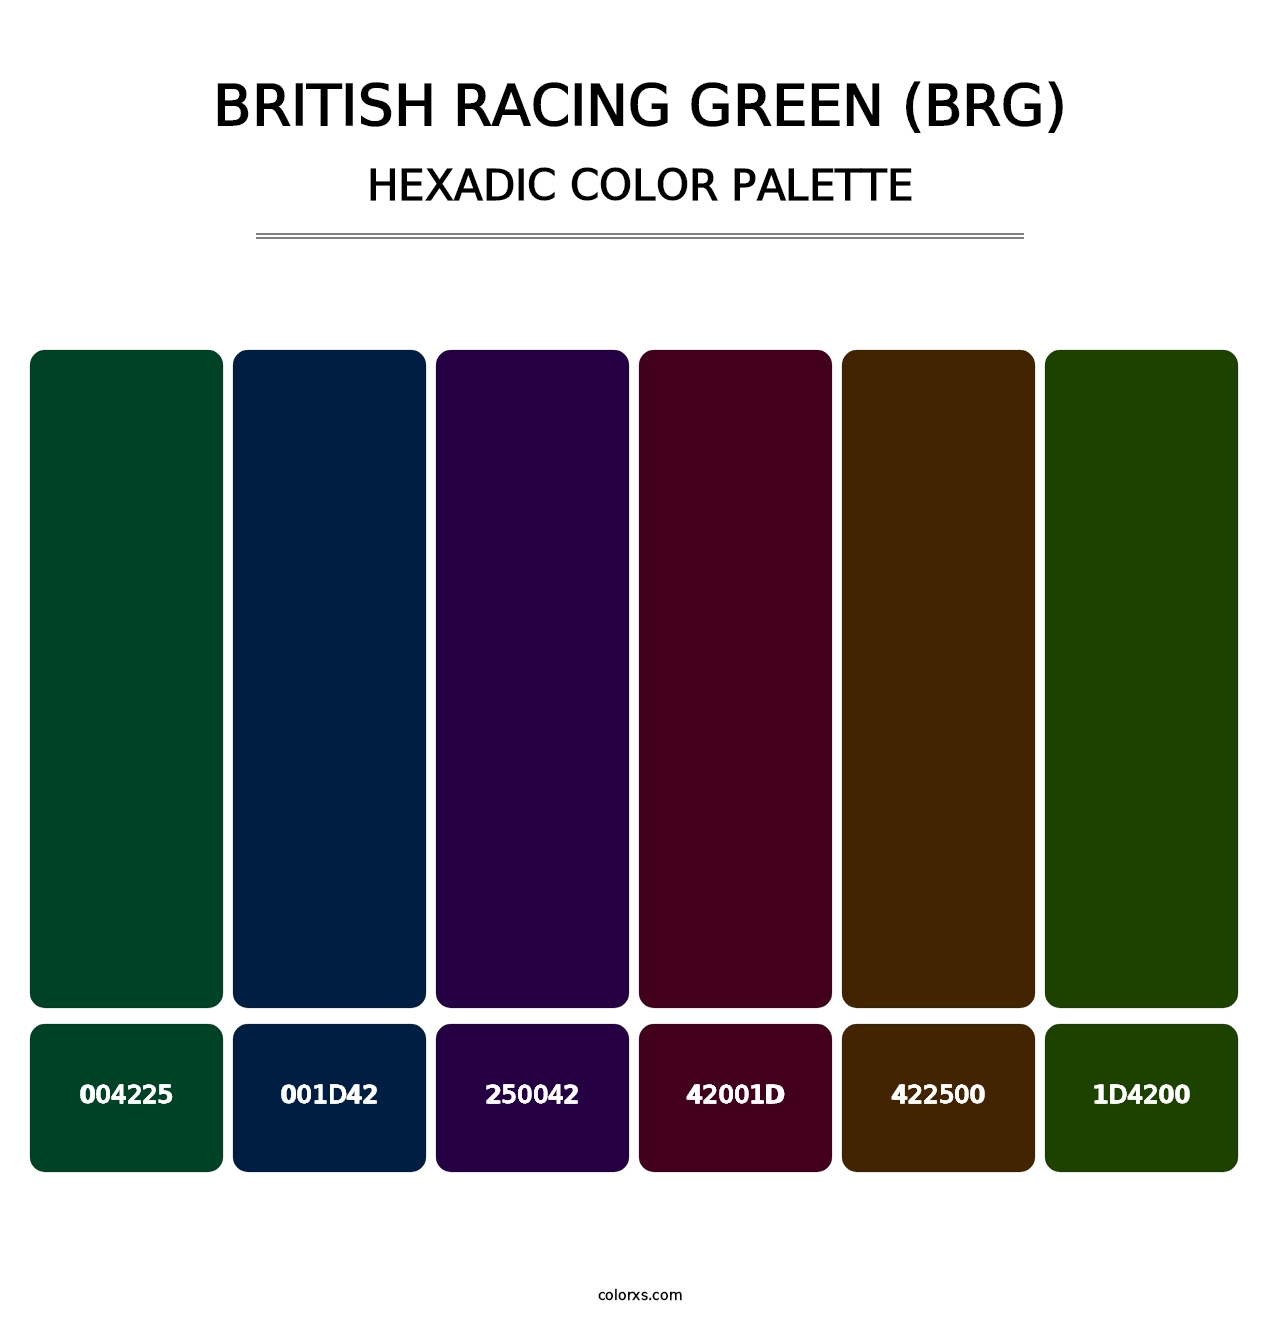 British Racing Green (BRG) - Hexadic Color Palette